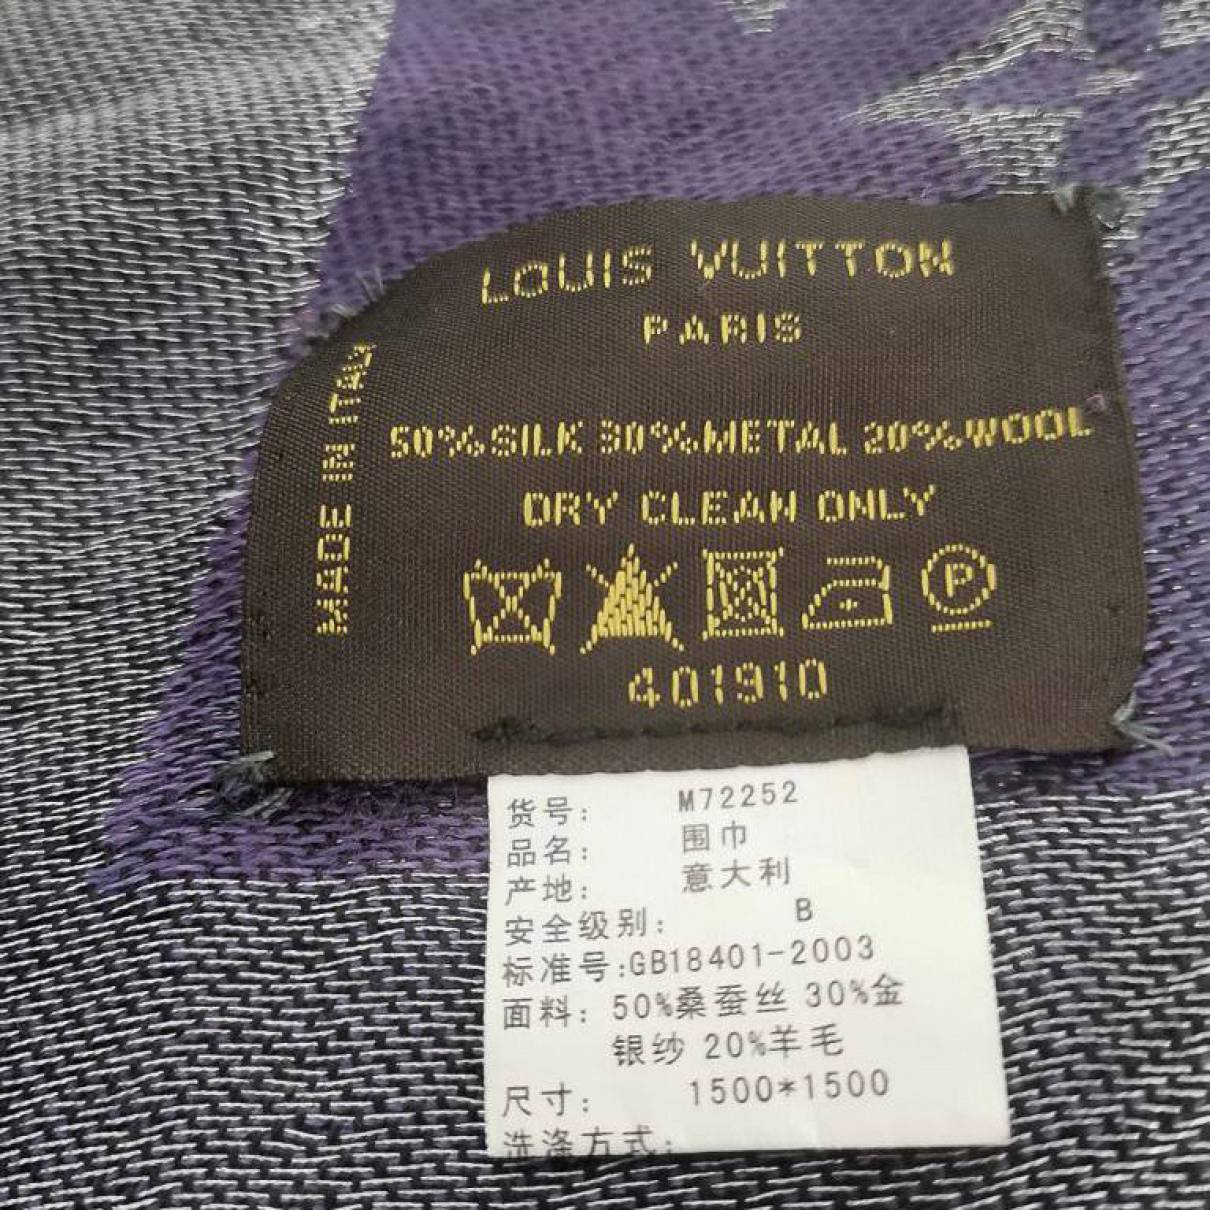 Louis Vuitton - Authenticated Châle Monogram Scarf - Silk Purple for Women, Very Good Condition